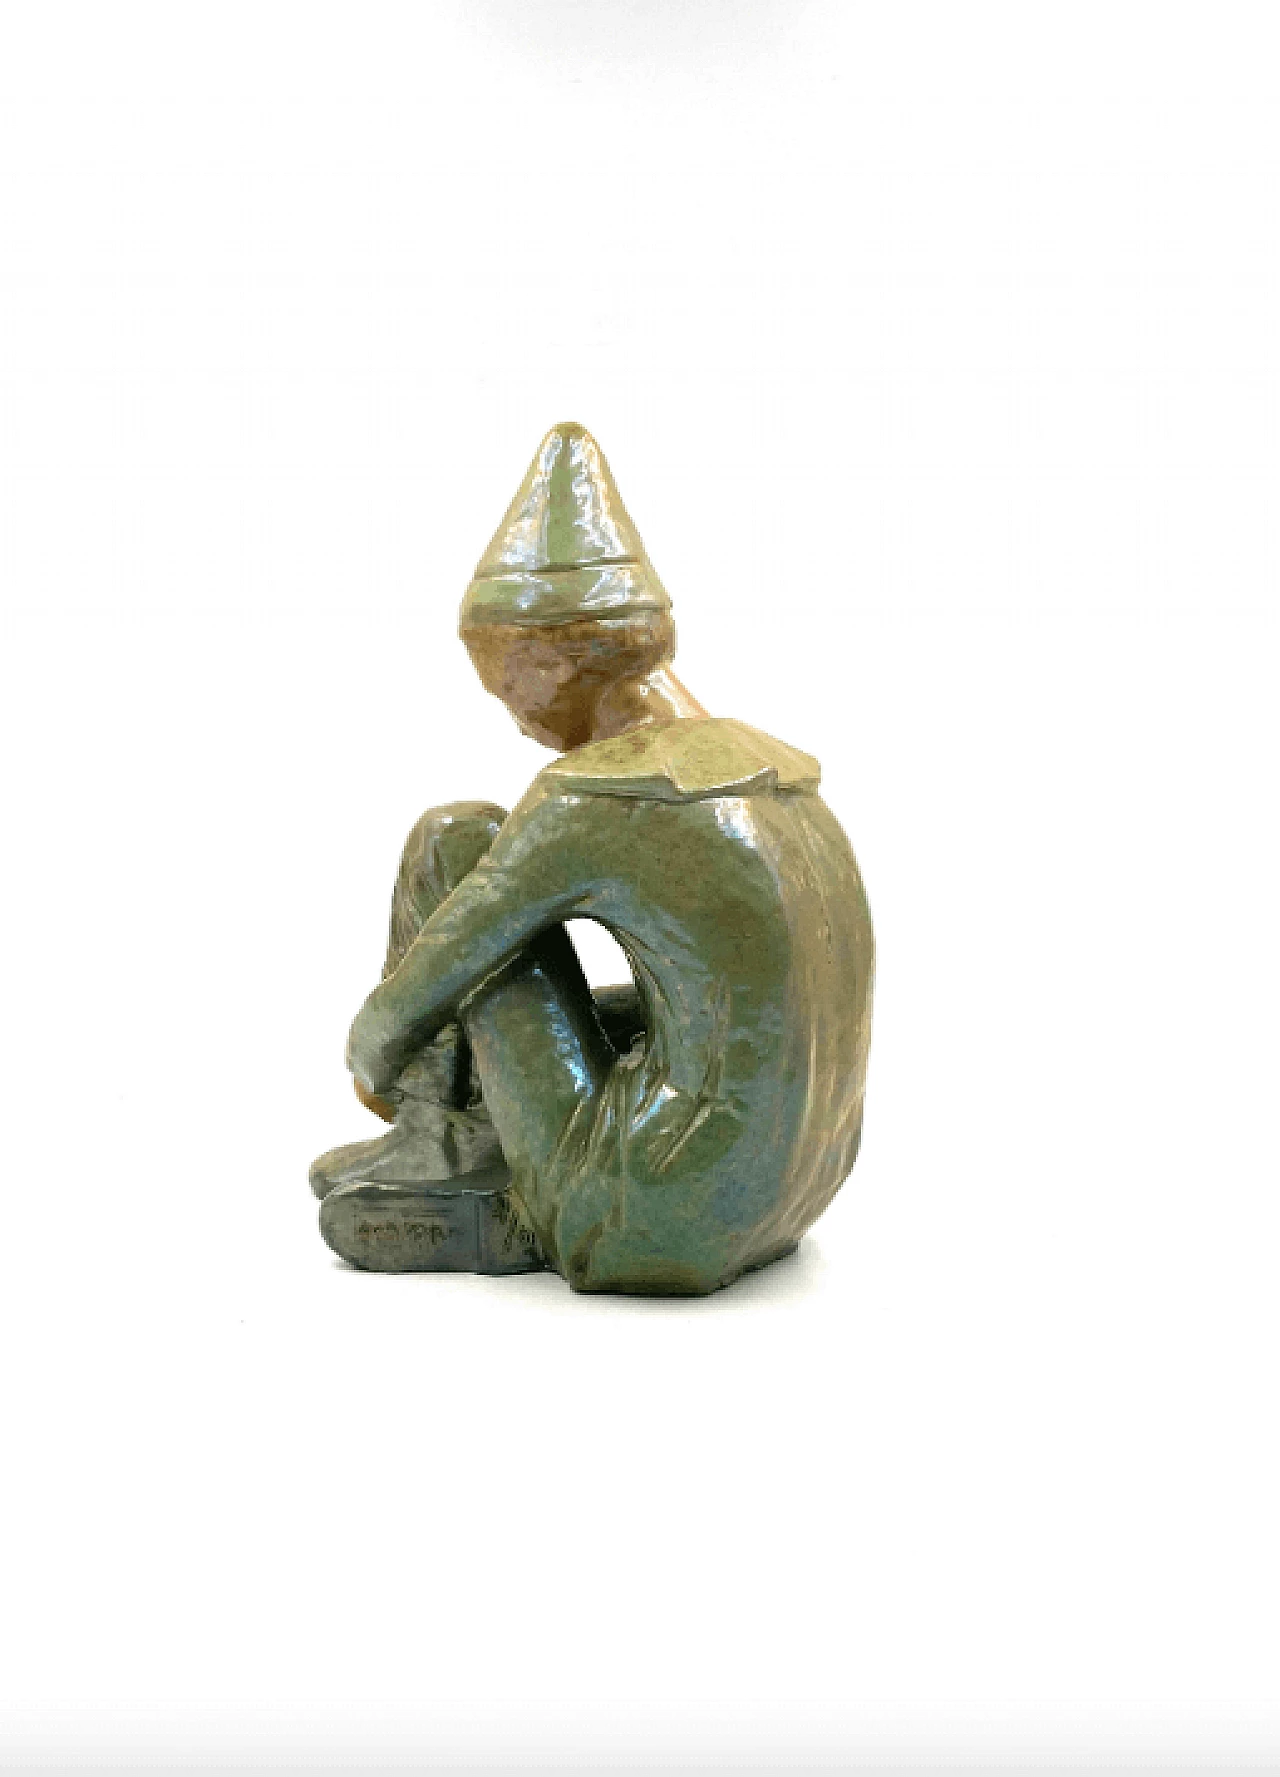 Giordano Tronconi, Seated boy, green ceramic figure from Faenza, 1950s 65